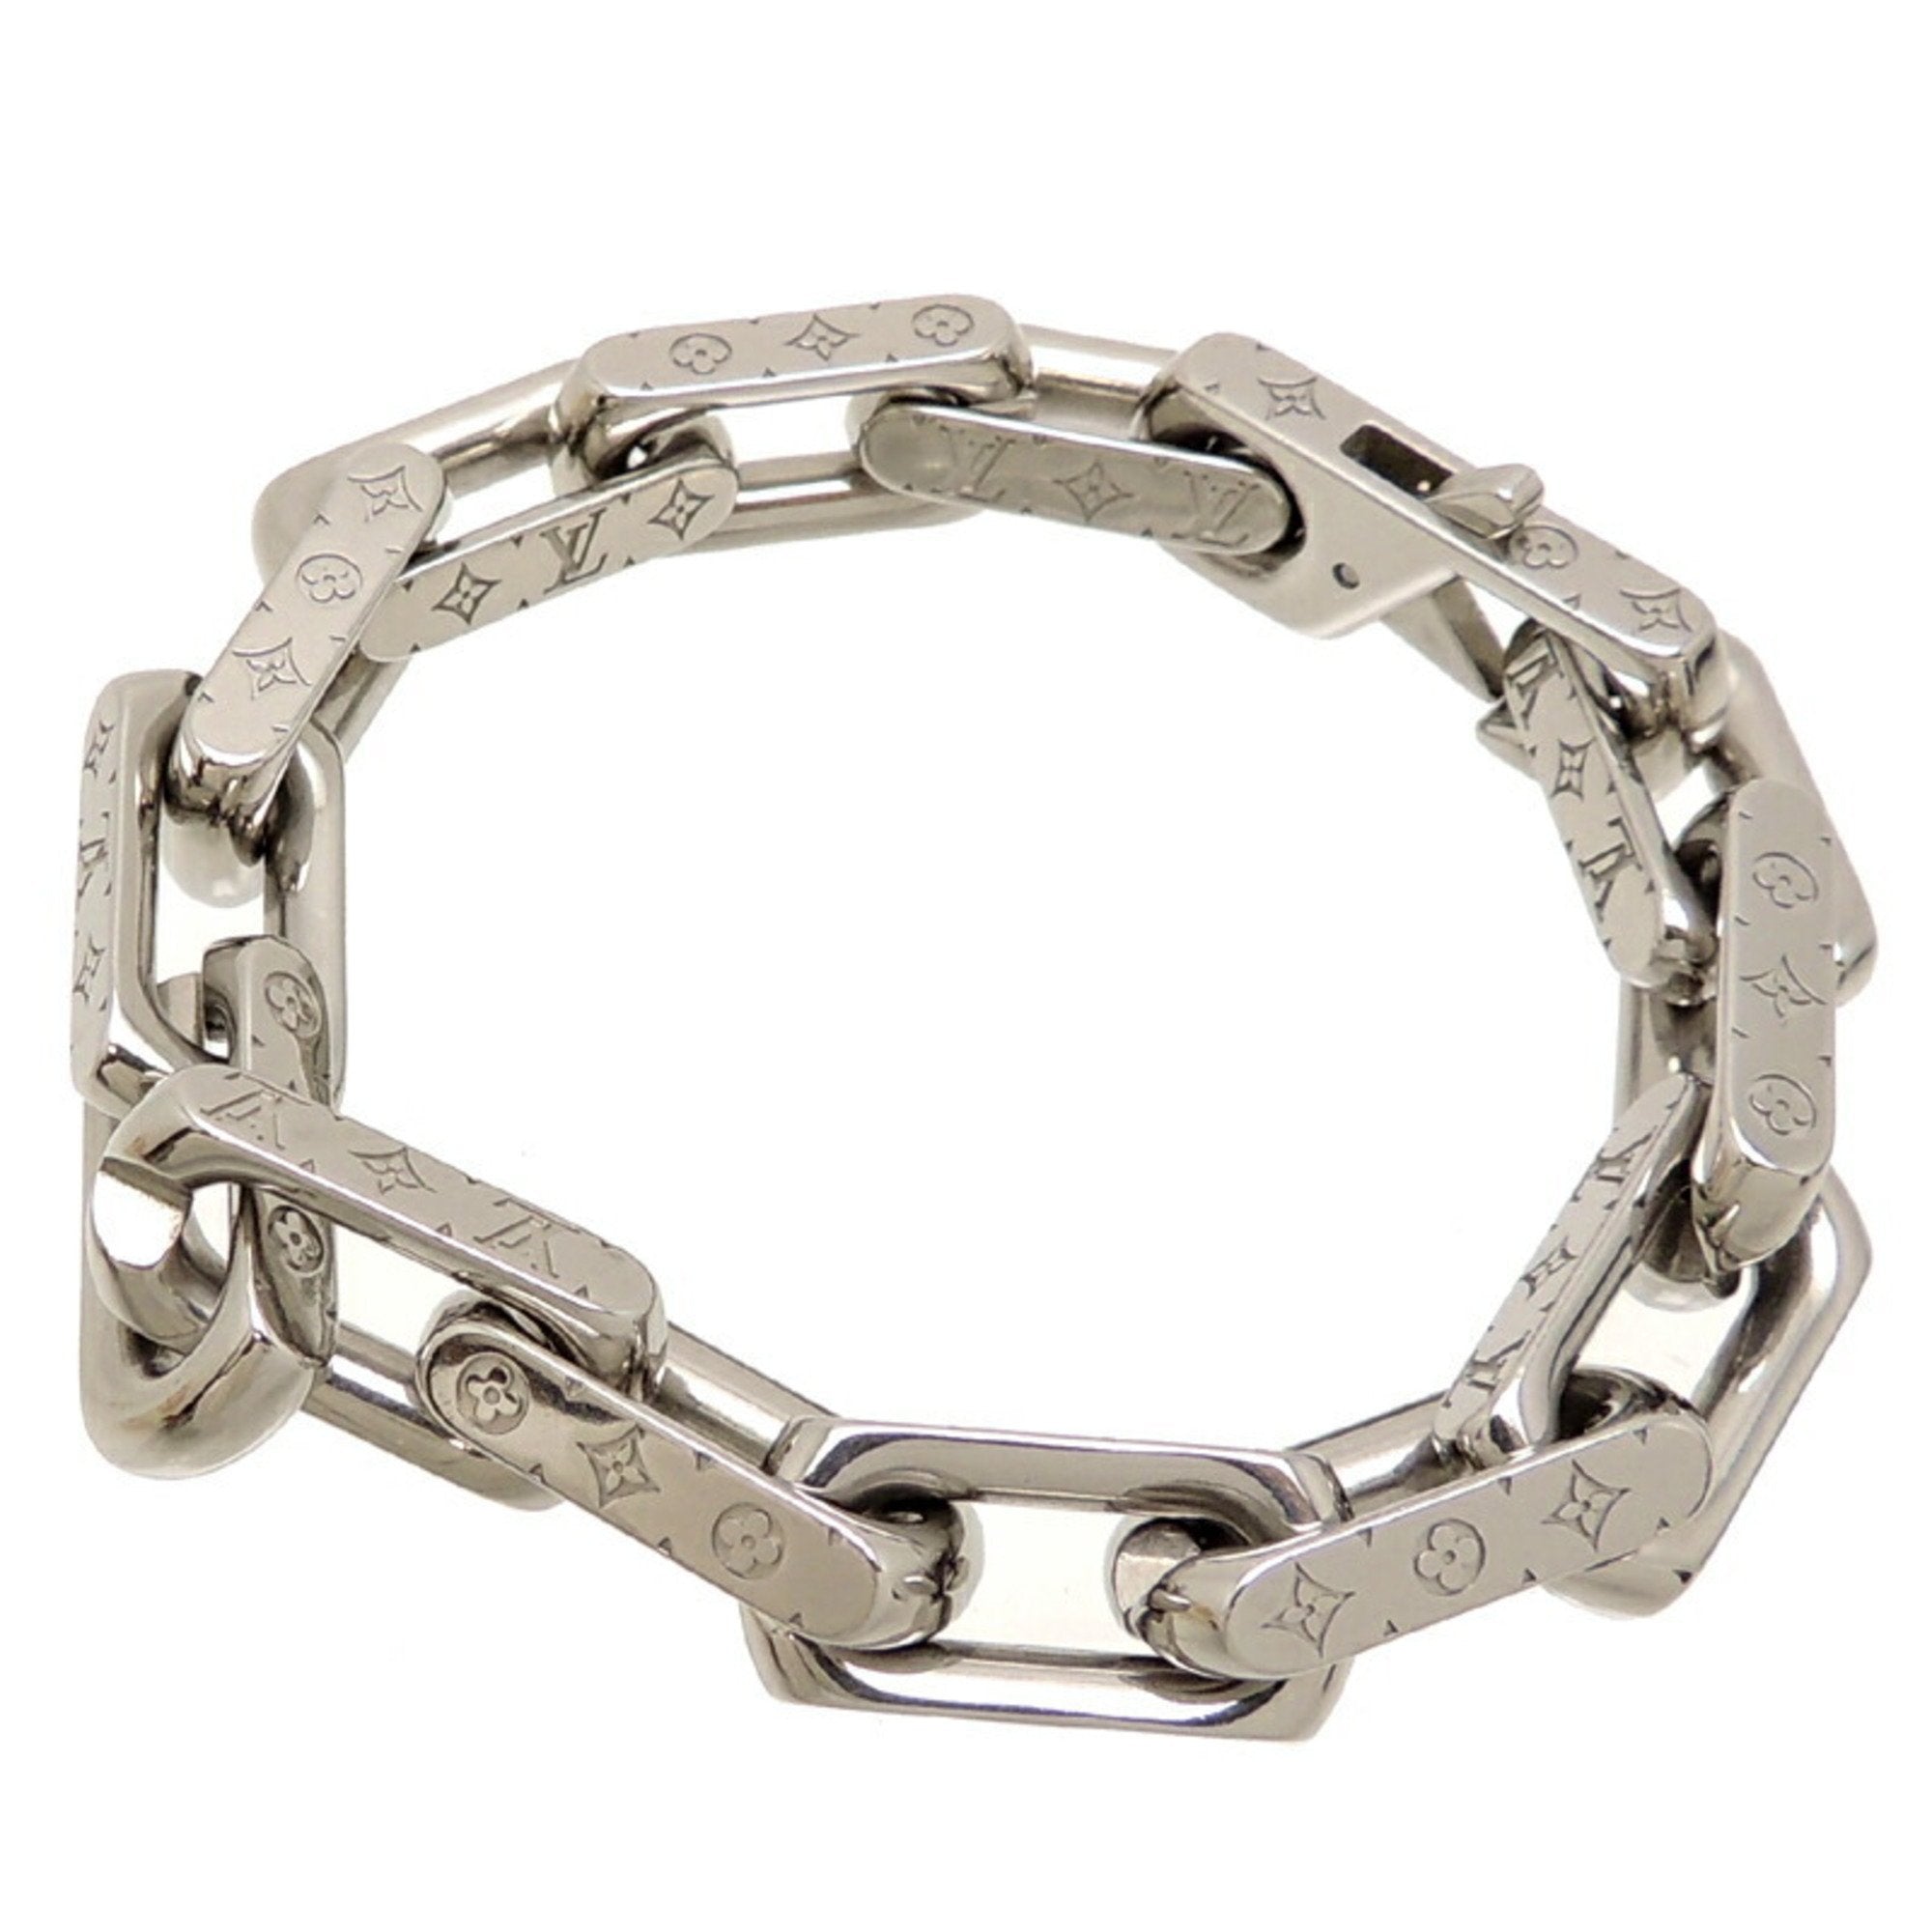 Louis Vuitton Monogram Chain Bracelet, Silver, M